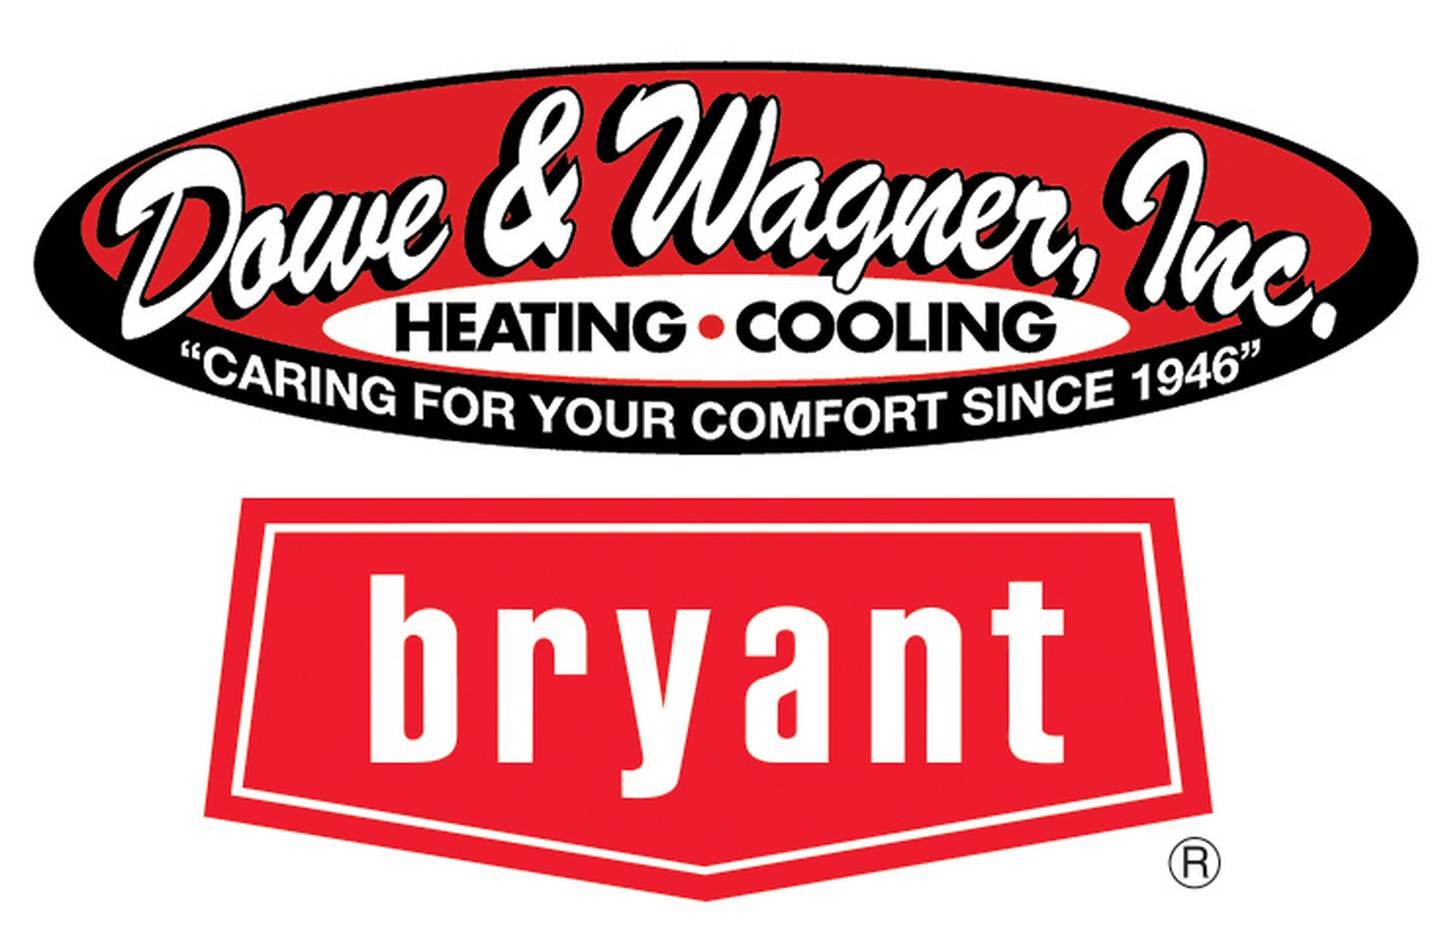 Dowe Wagner Bryant logo